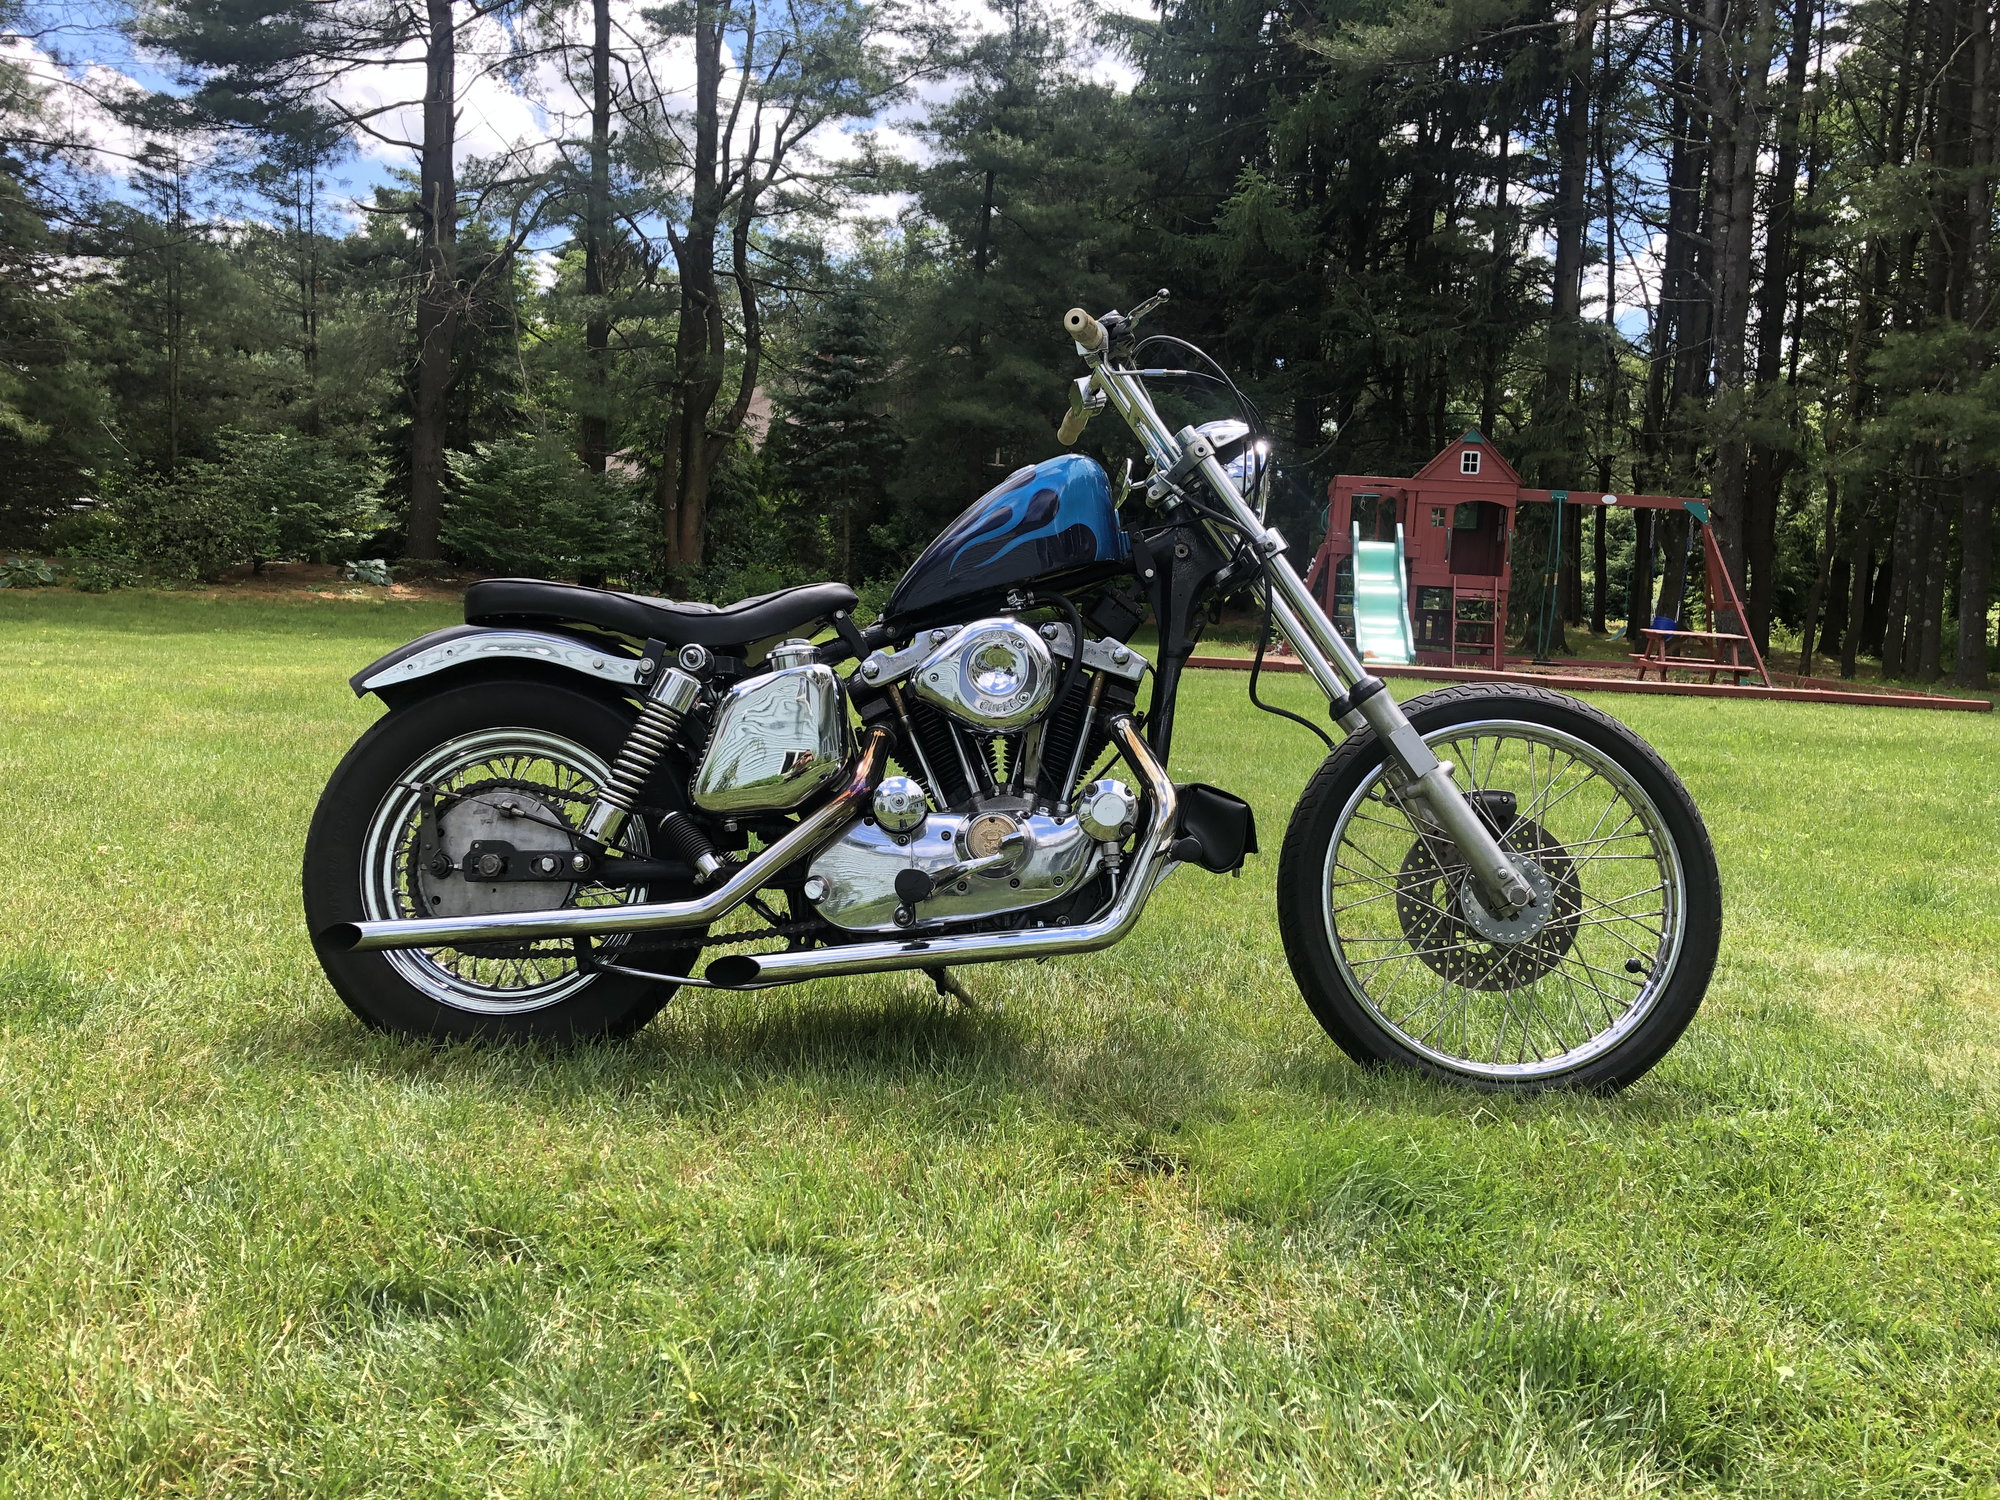 1977 Ironhead Sportster Connecticut $3500 OBO - Harley Davidson Forums